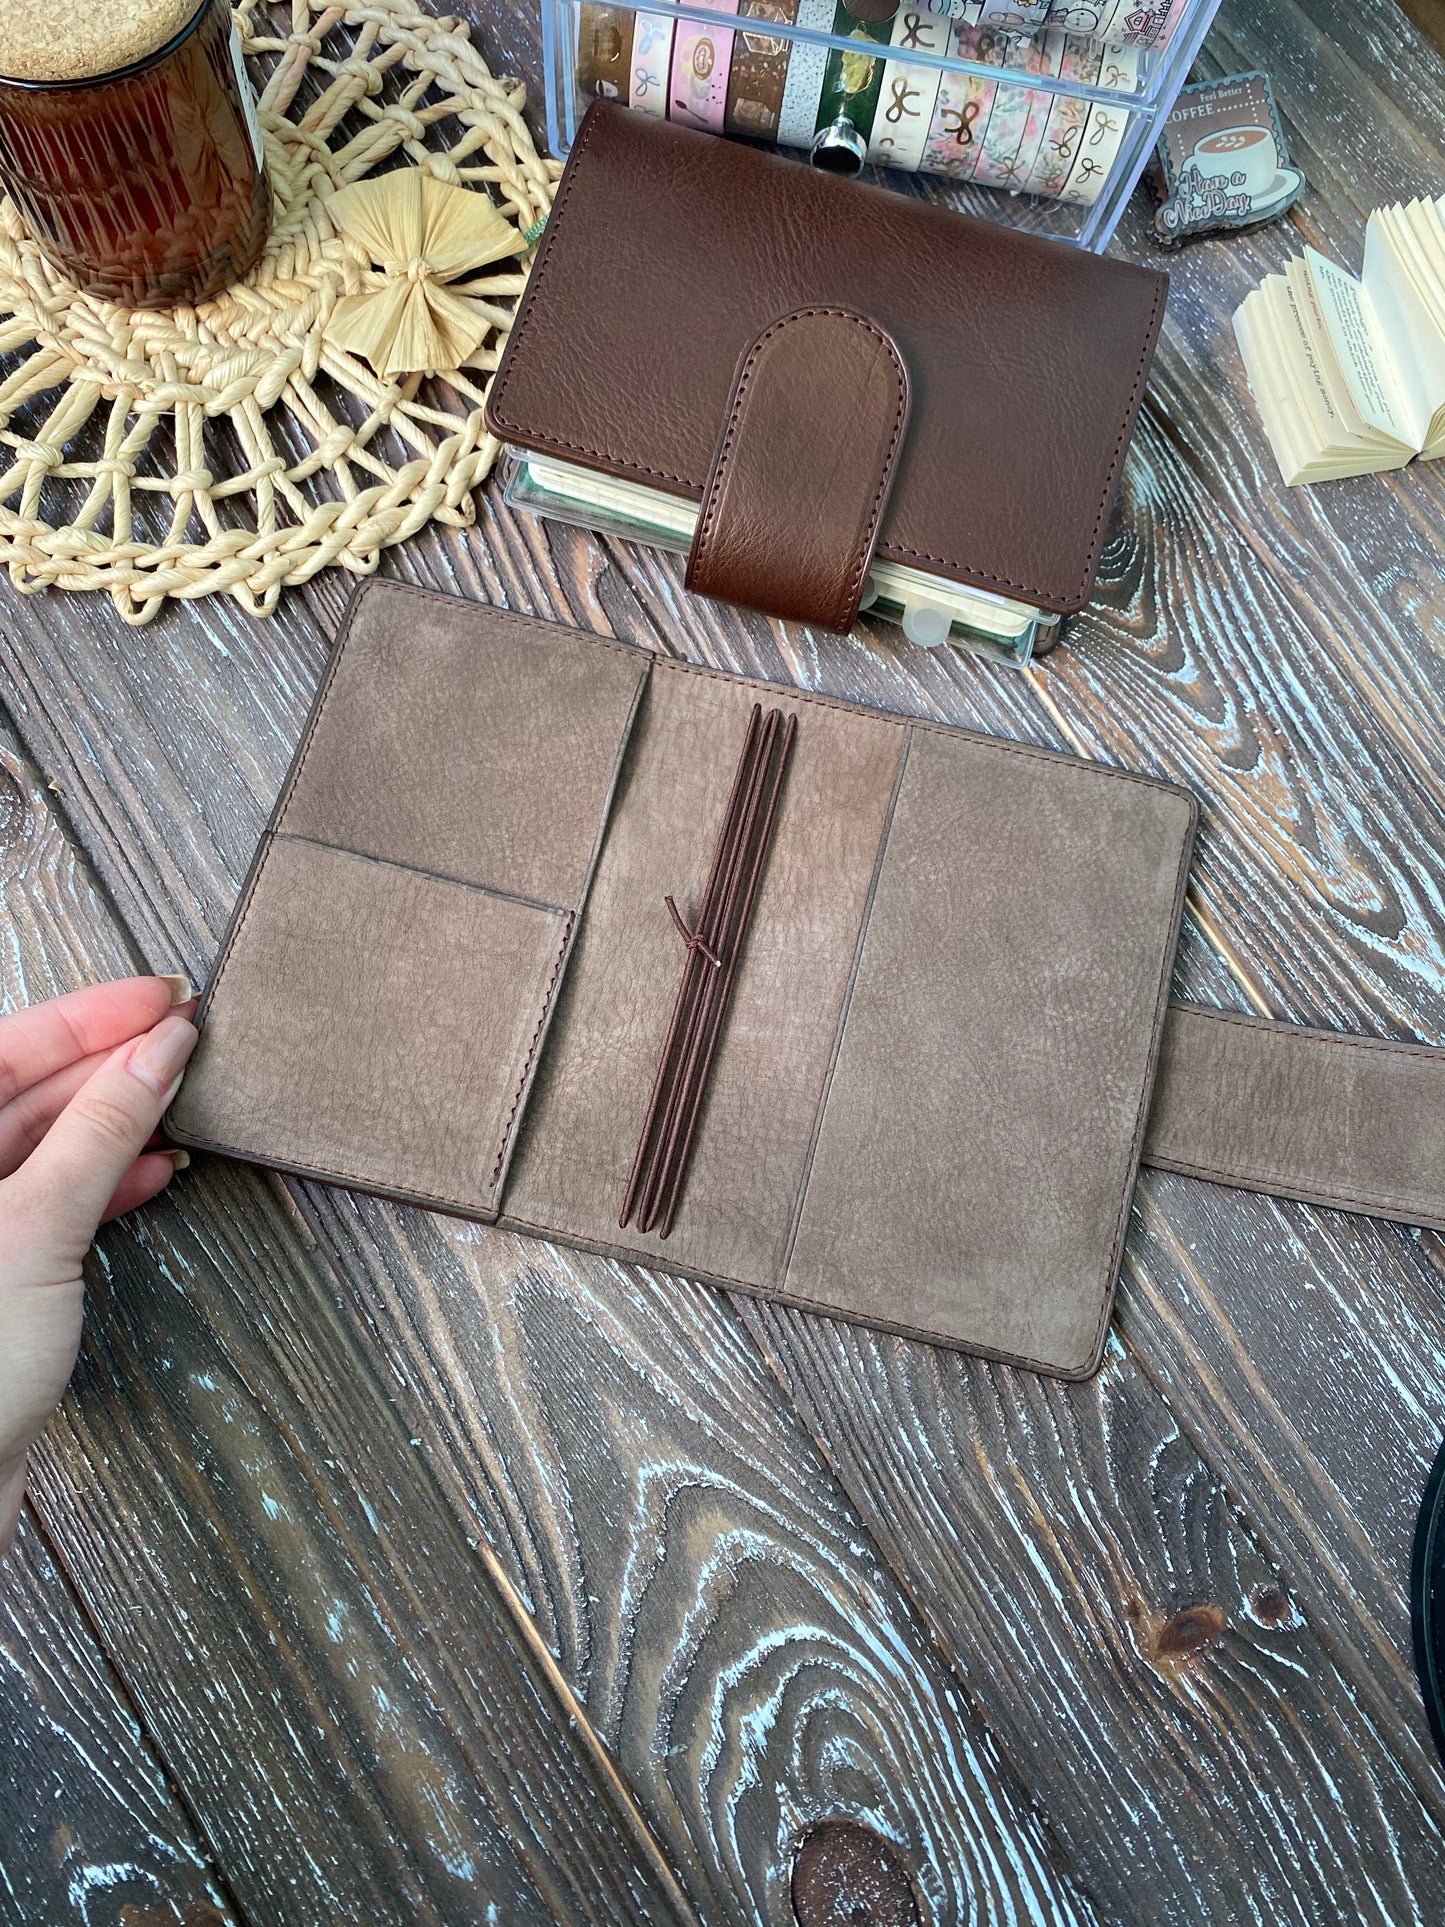 Moleskine pocket TN cover with strings Veg tan outside | Nubuck leather inside